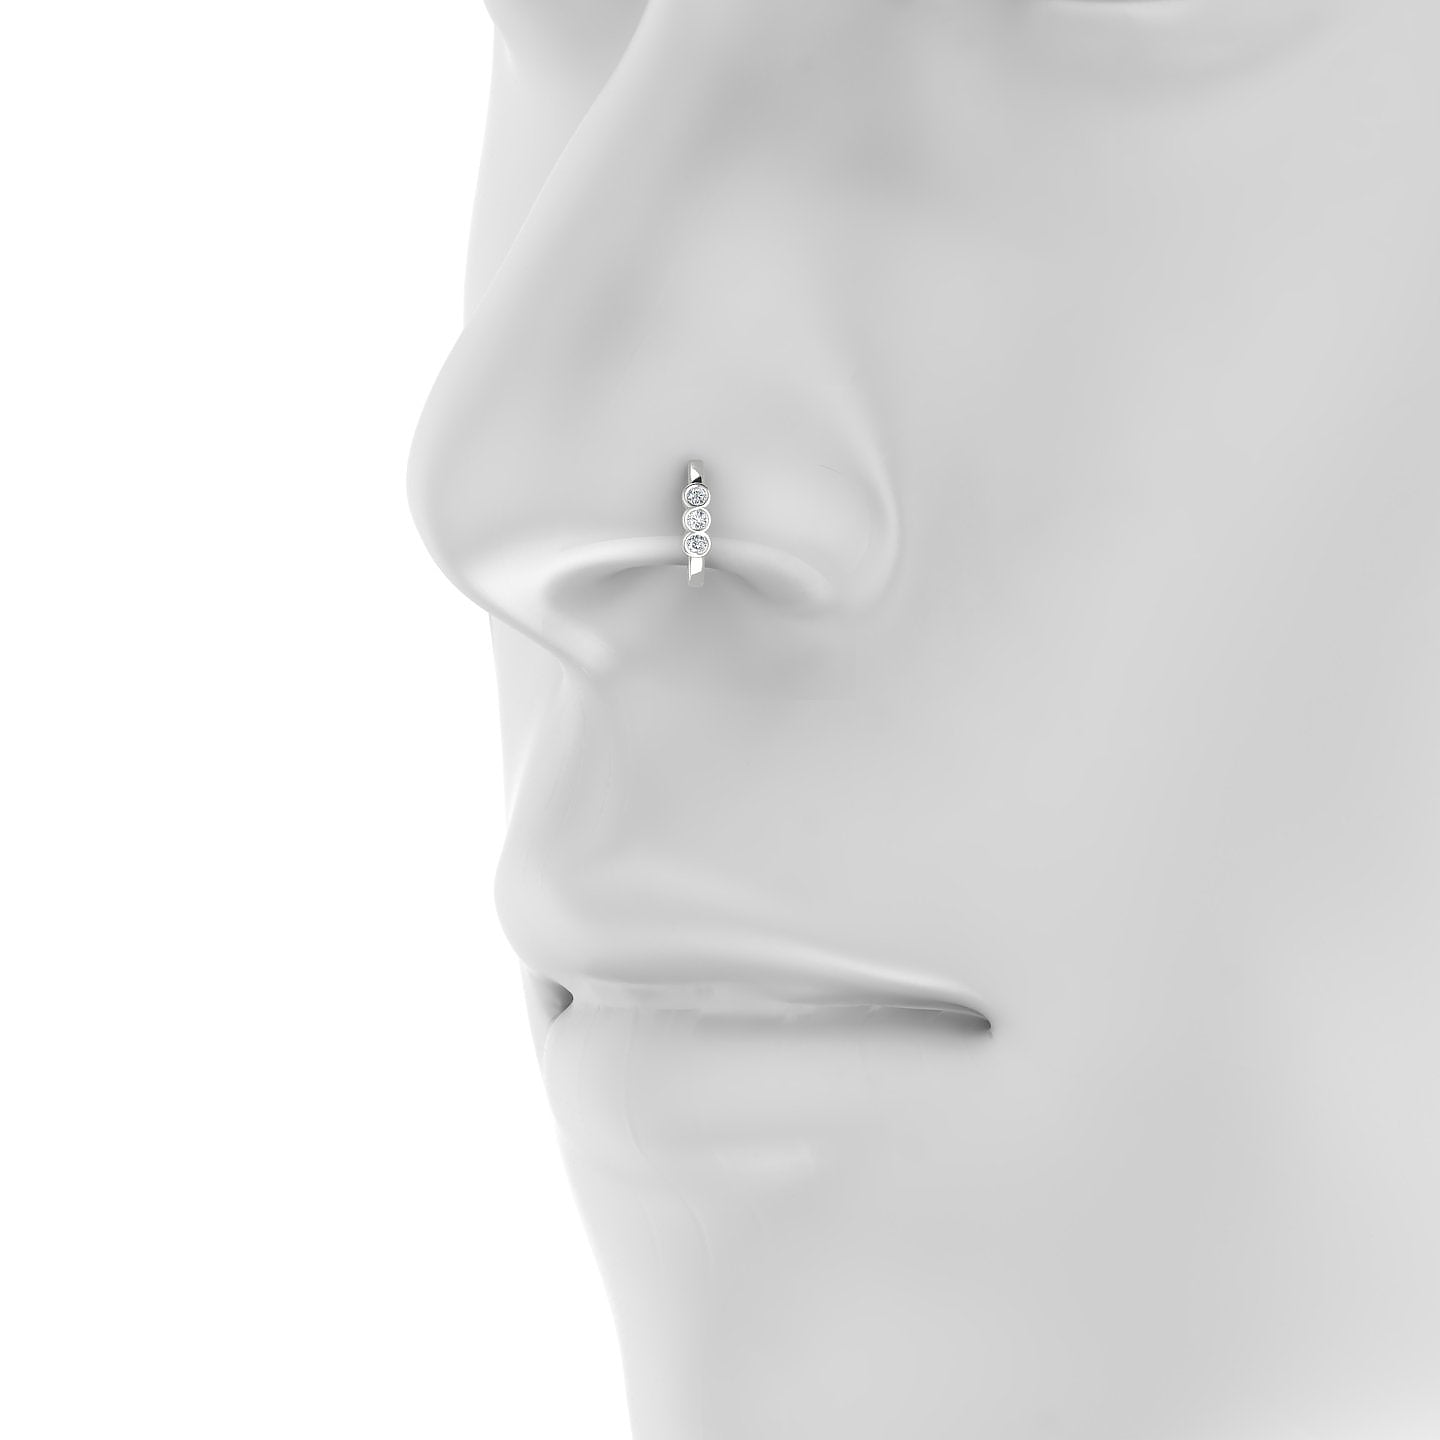 Leto | 18k White Gold 8 mm Trilogy Diamond Nose Ring Piercing